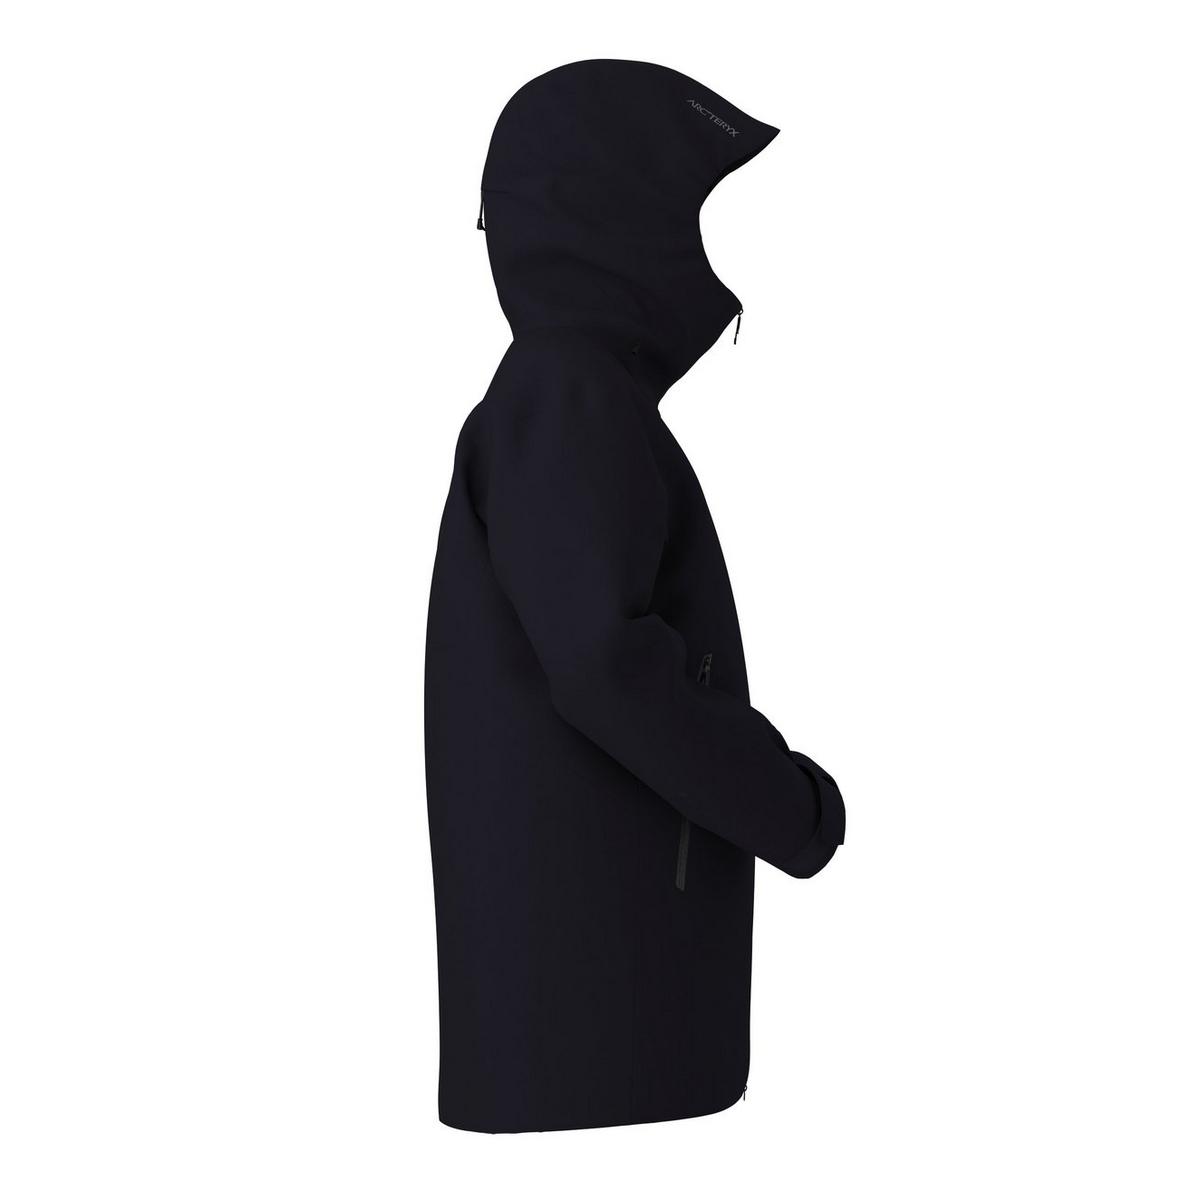 Arc'teryx Women's Sentinel Insulated Ski Jacket - Black